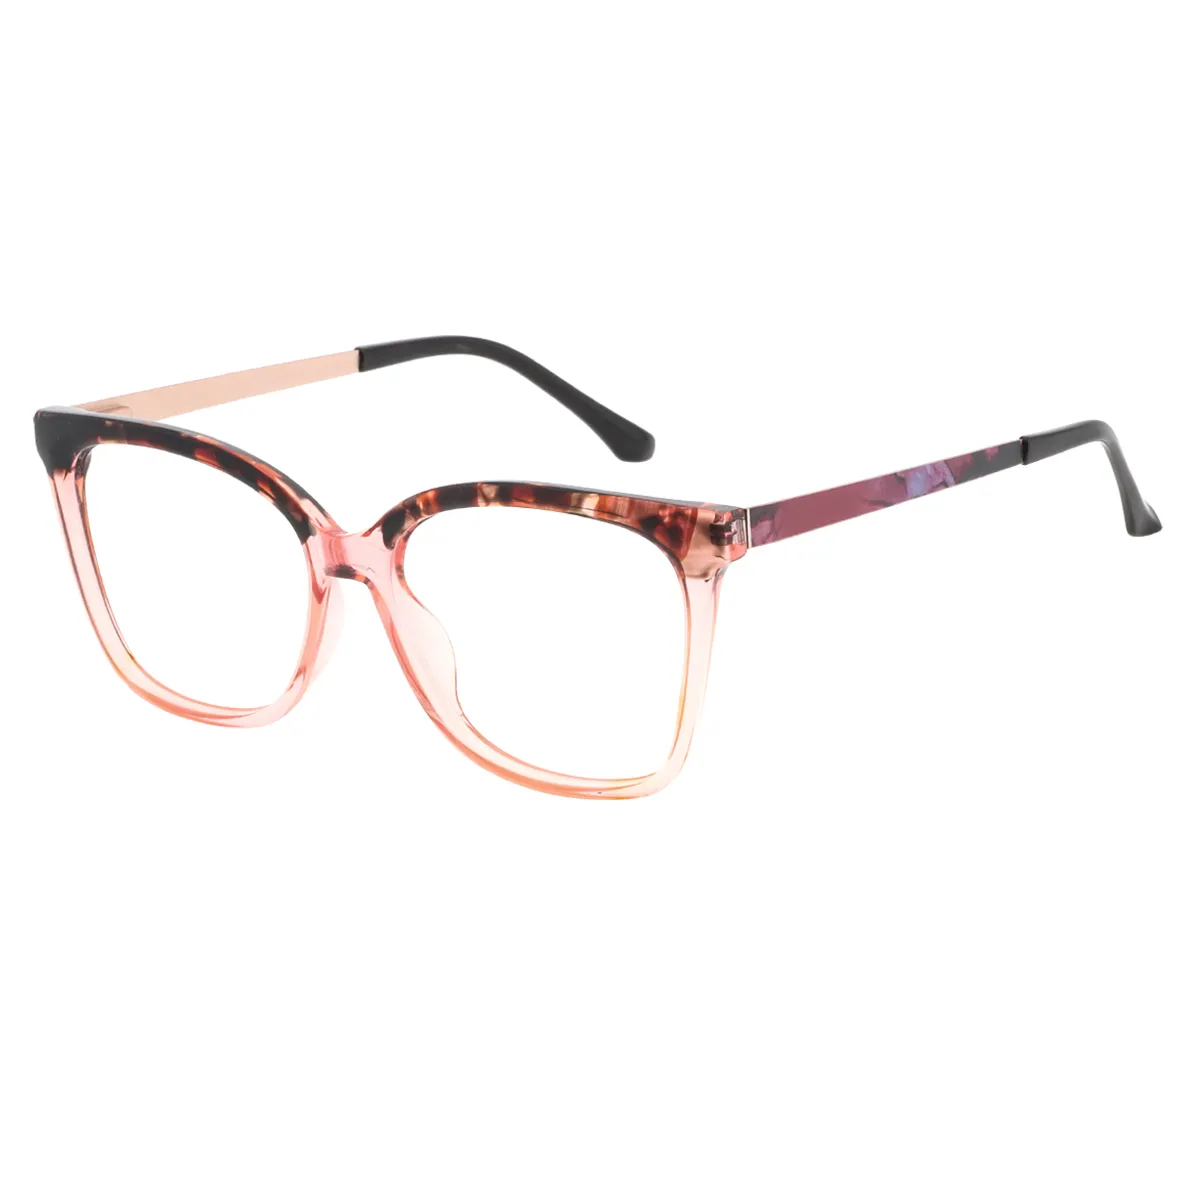 Fashion Square Brown Glasses for Women